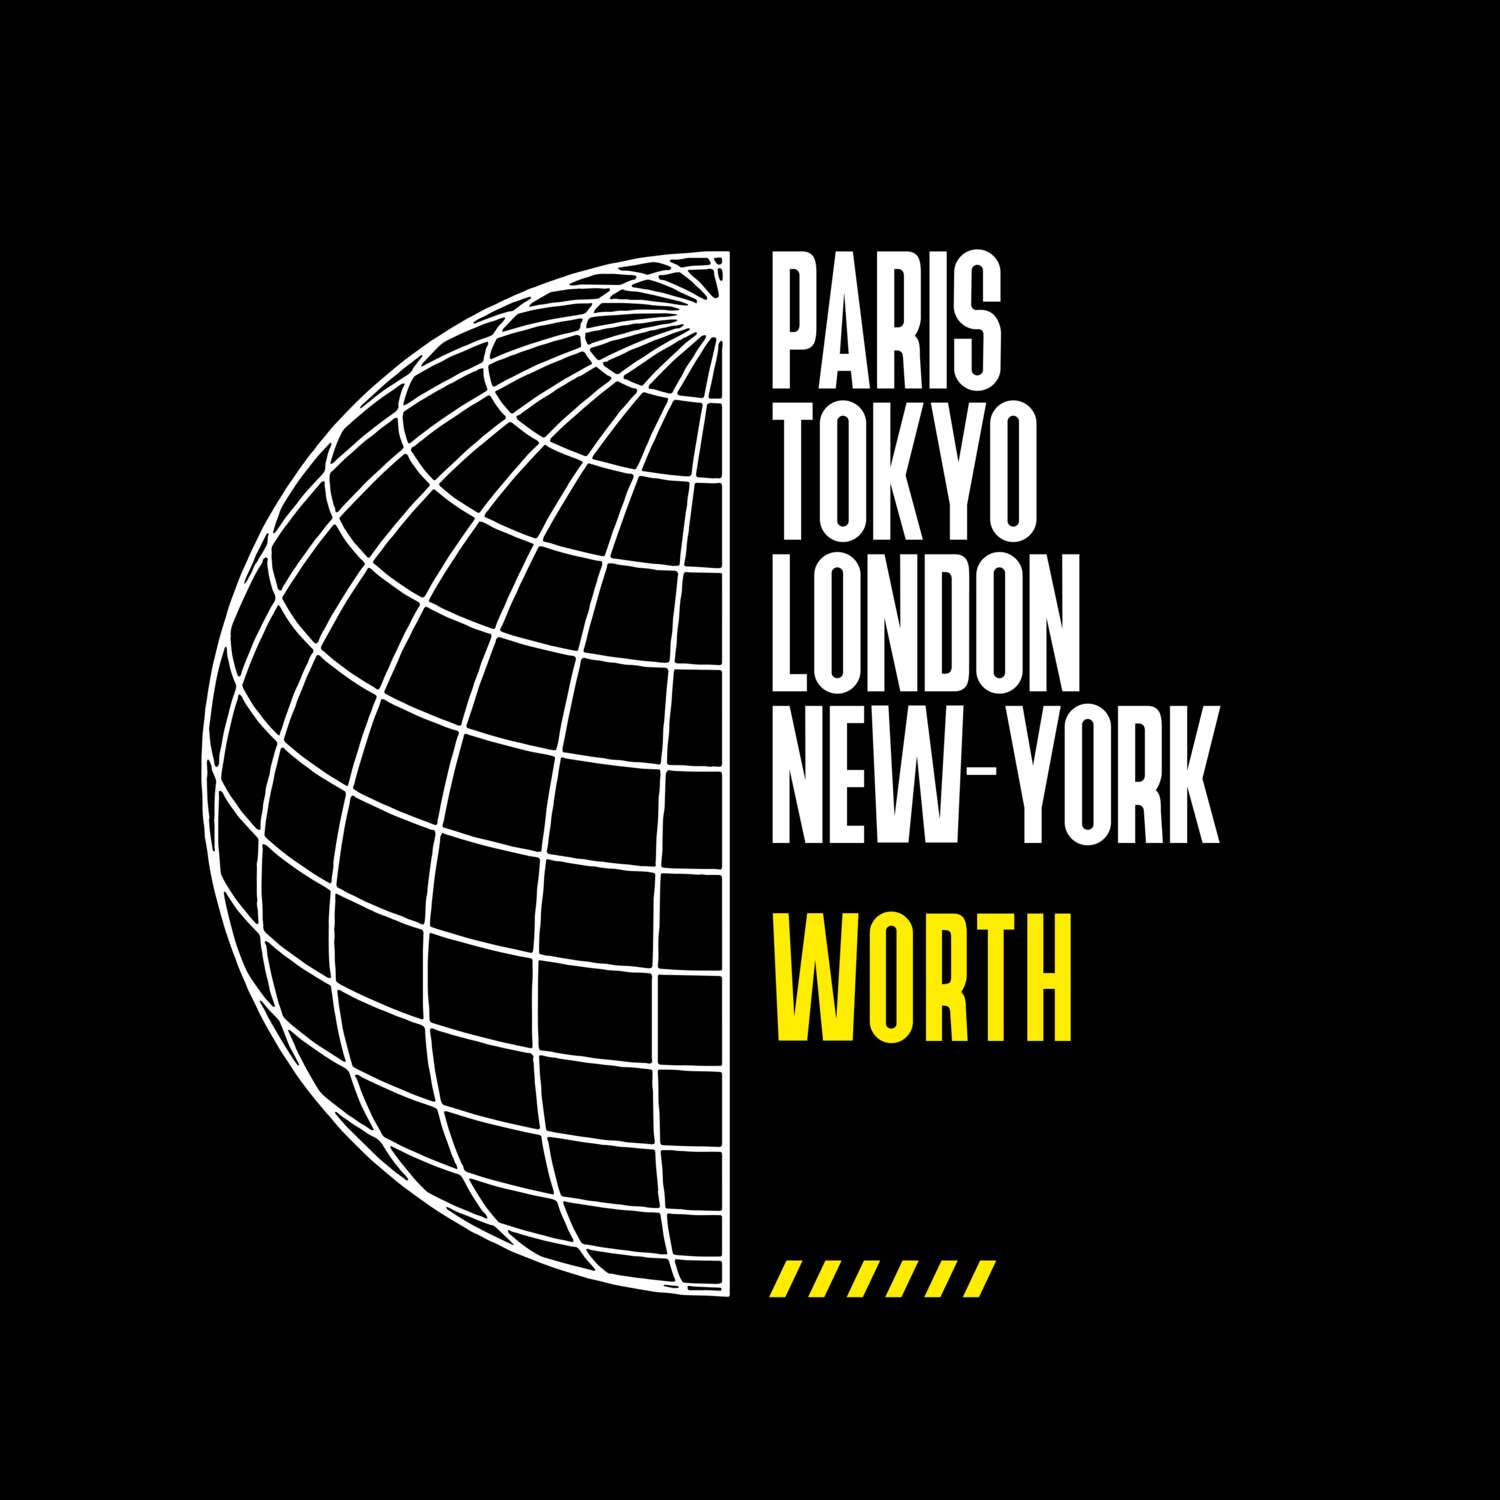 Worth T-Shirt »Paris Tokyo London«